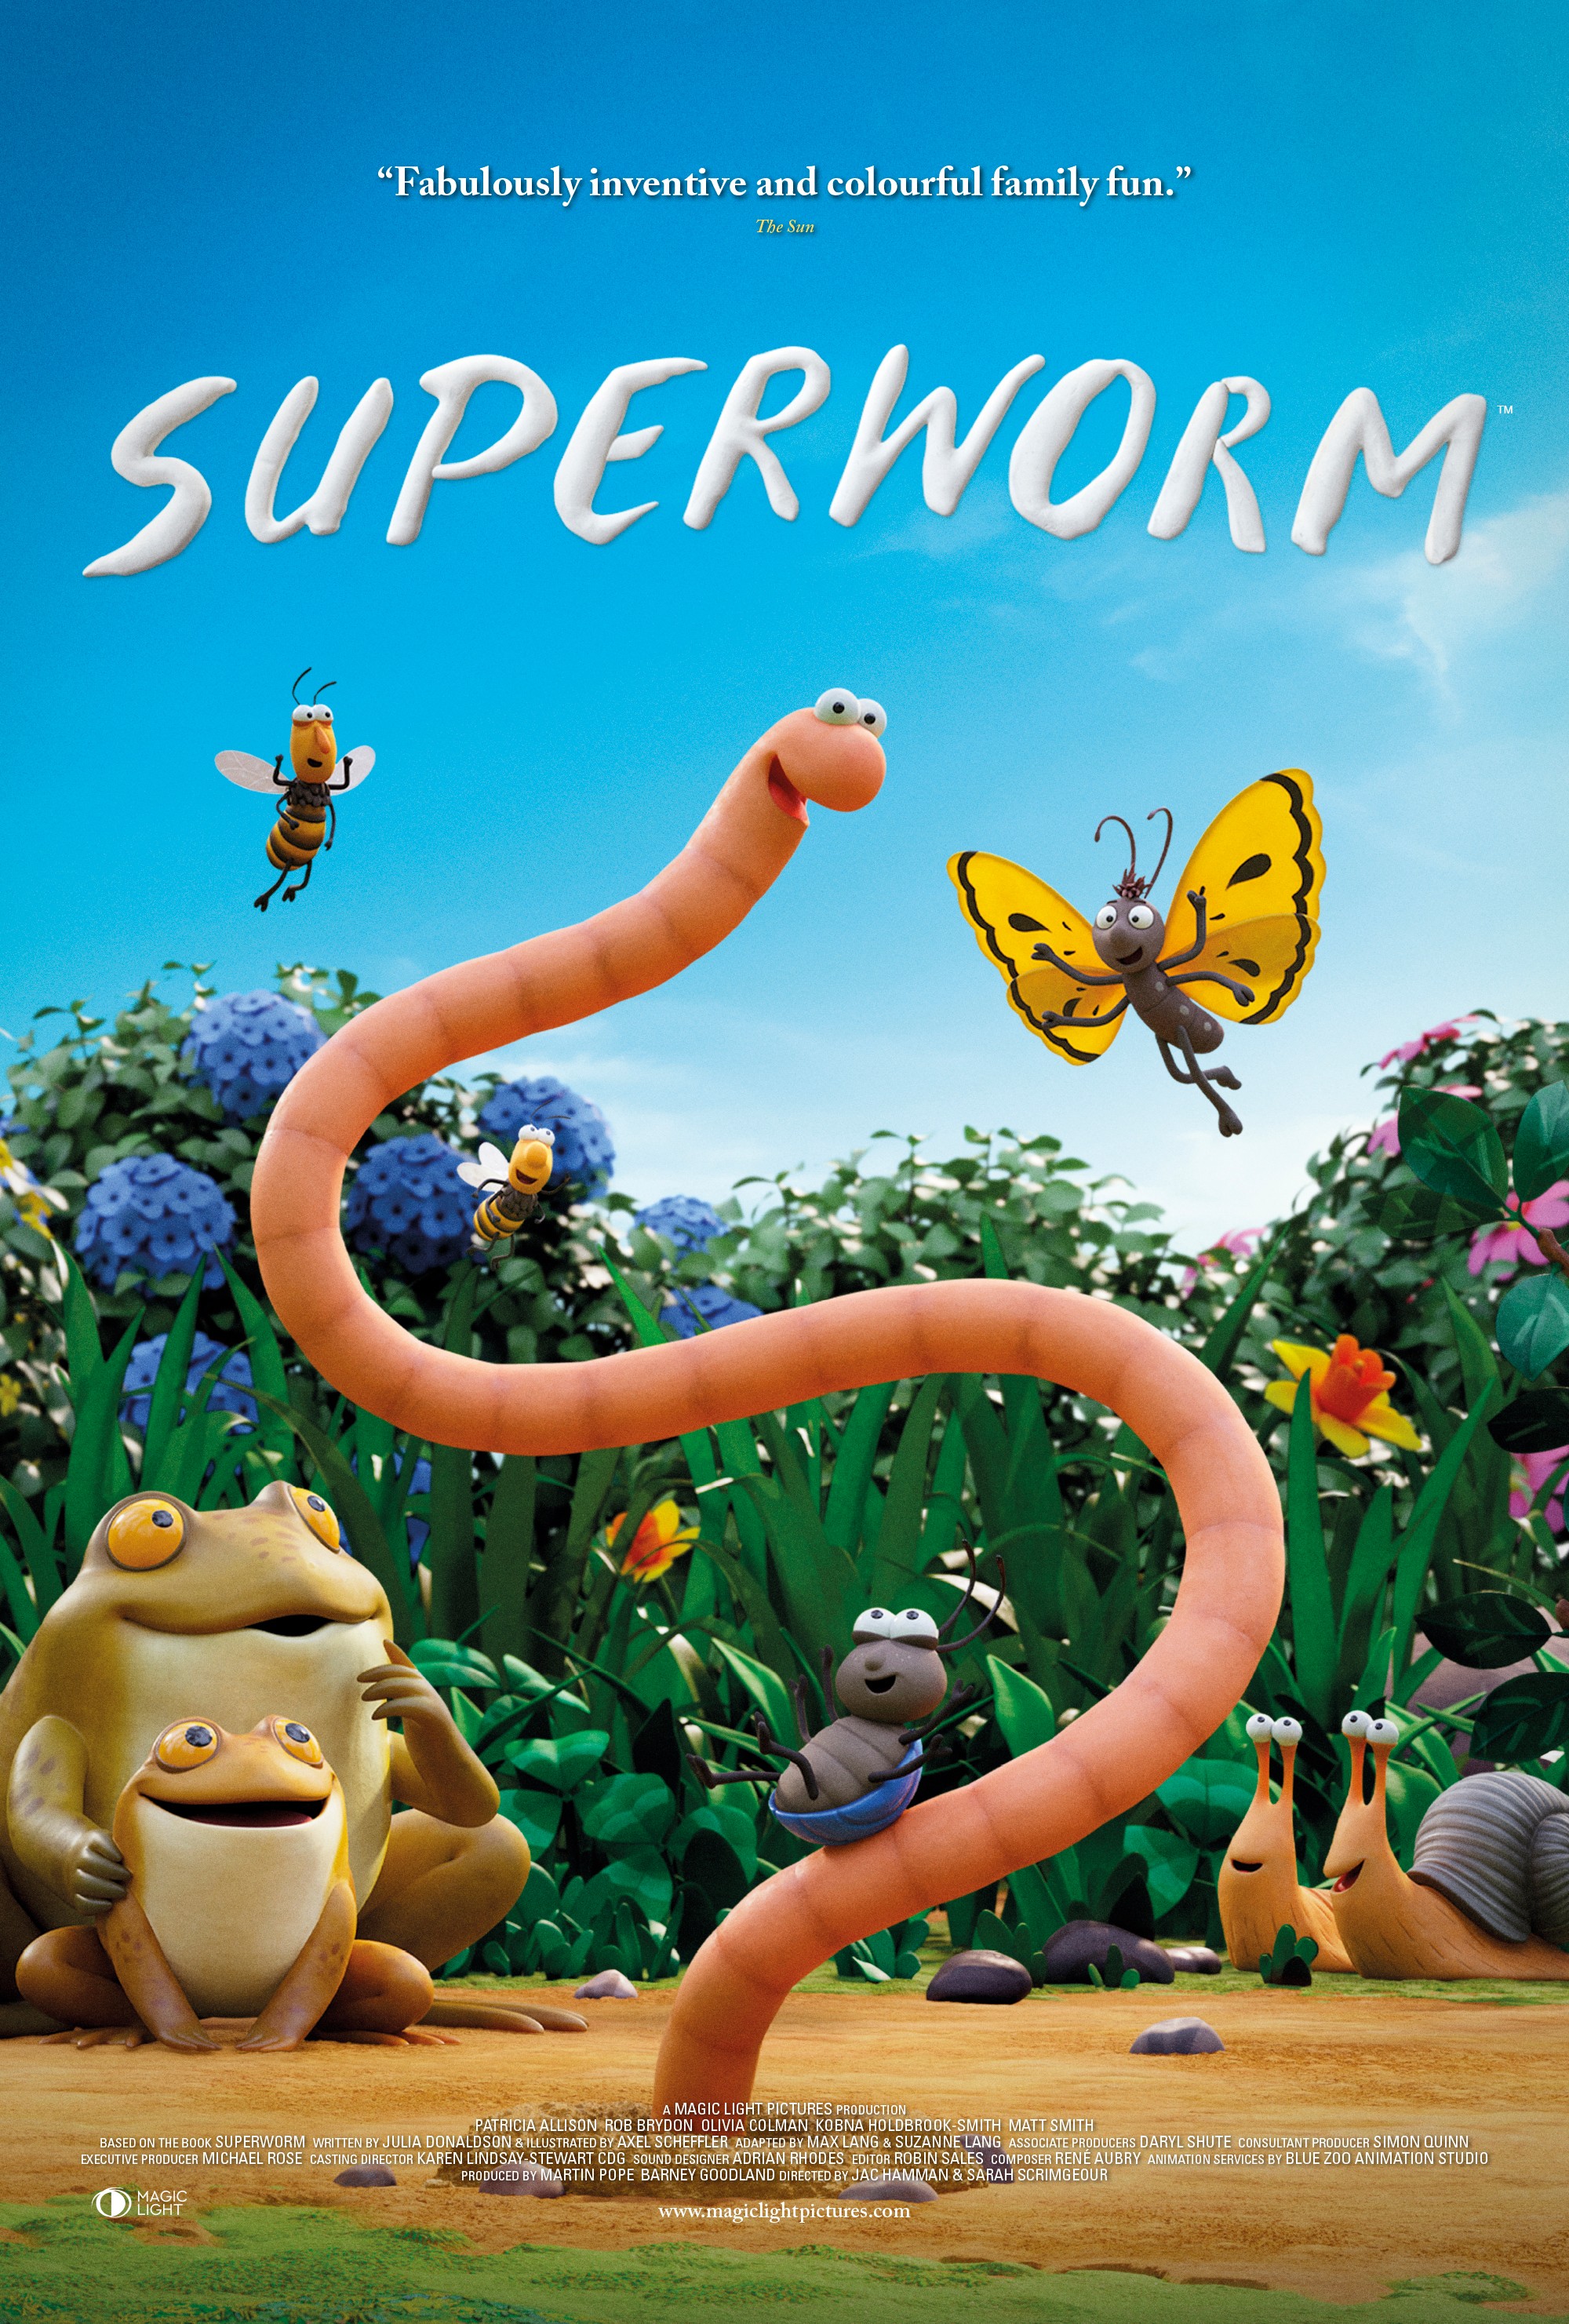 Mega Sized Movie Poster Image for Superworm